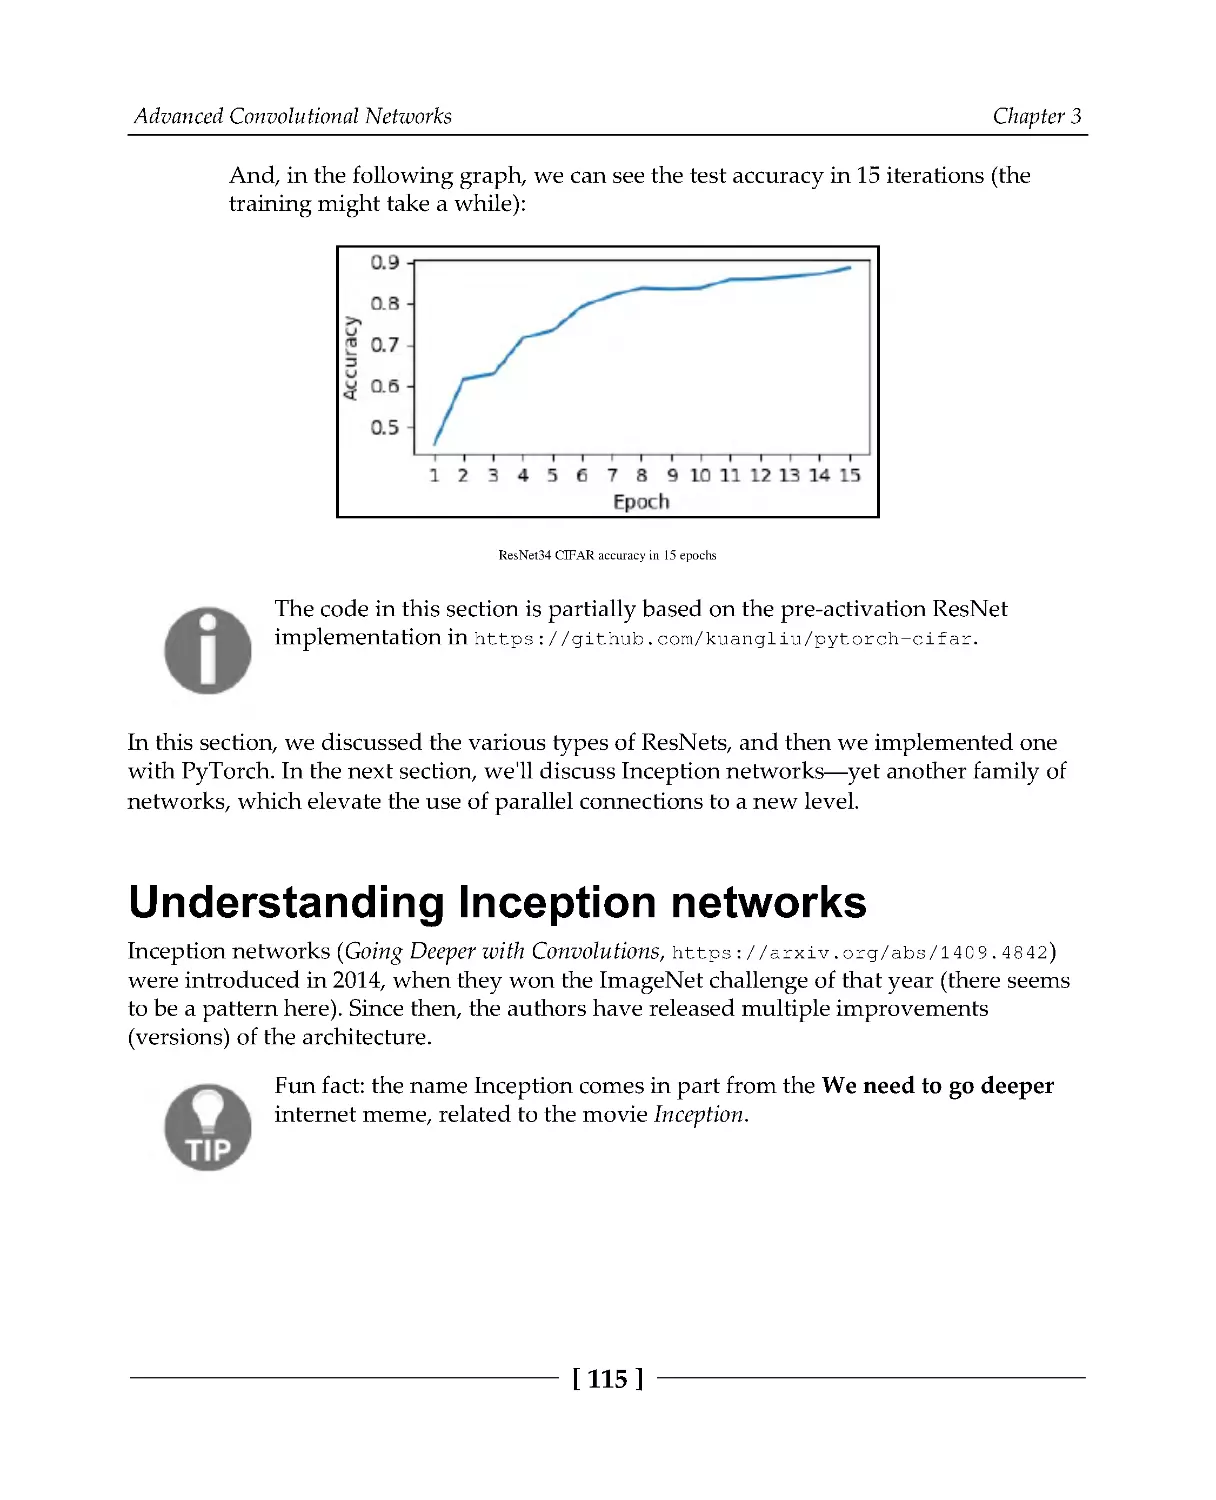 Understanding Inception networks